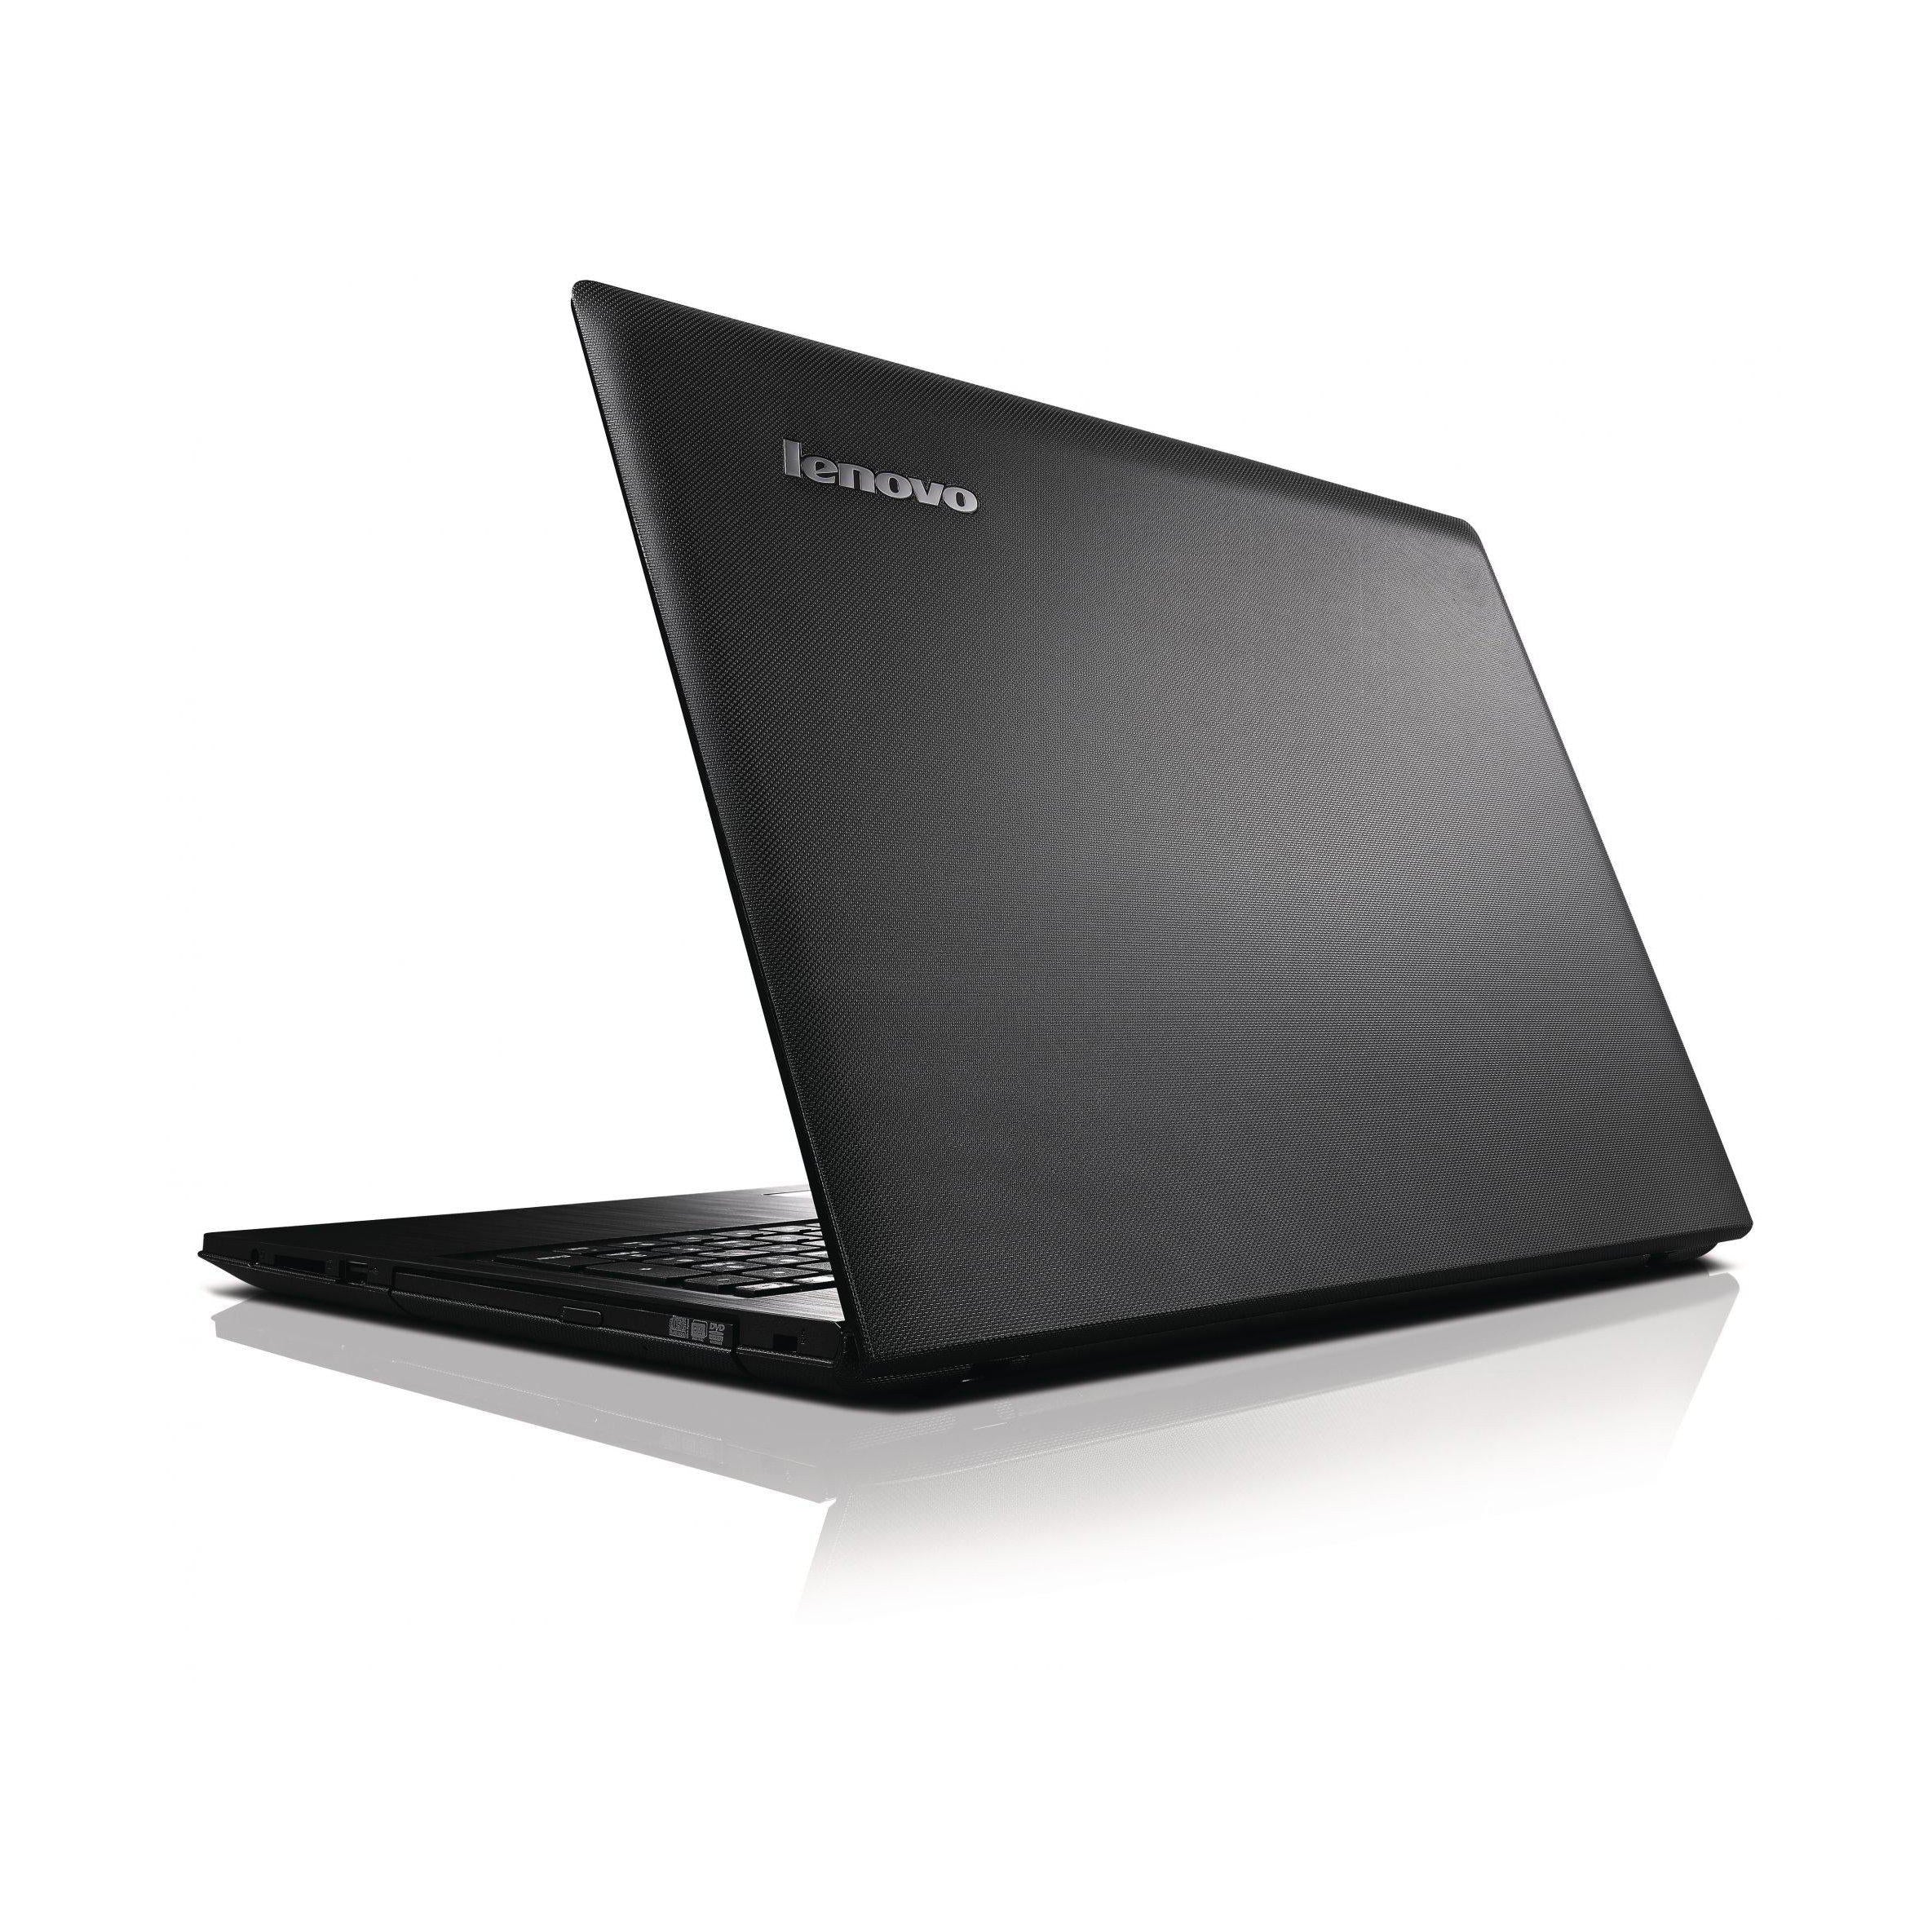 Lenovo B5400 15.6-inch Laptop, Intel Core i3, 4GB RAM, 500GB HDD, Black